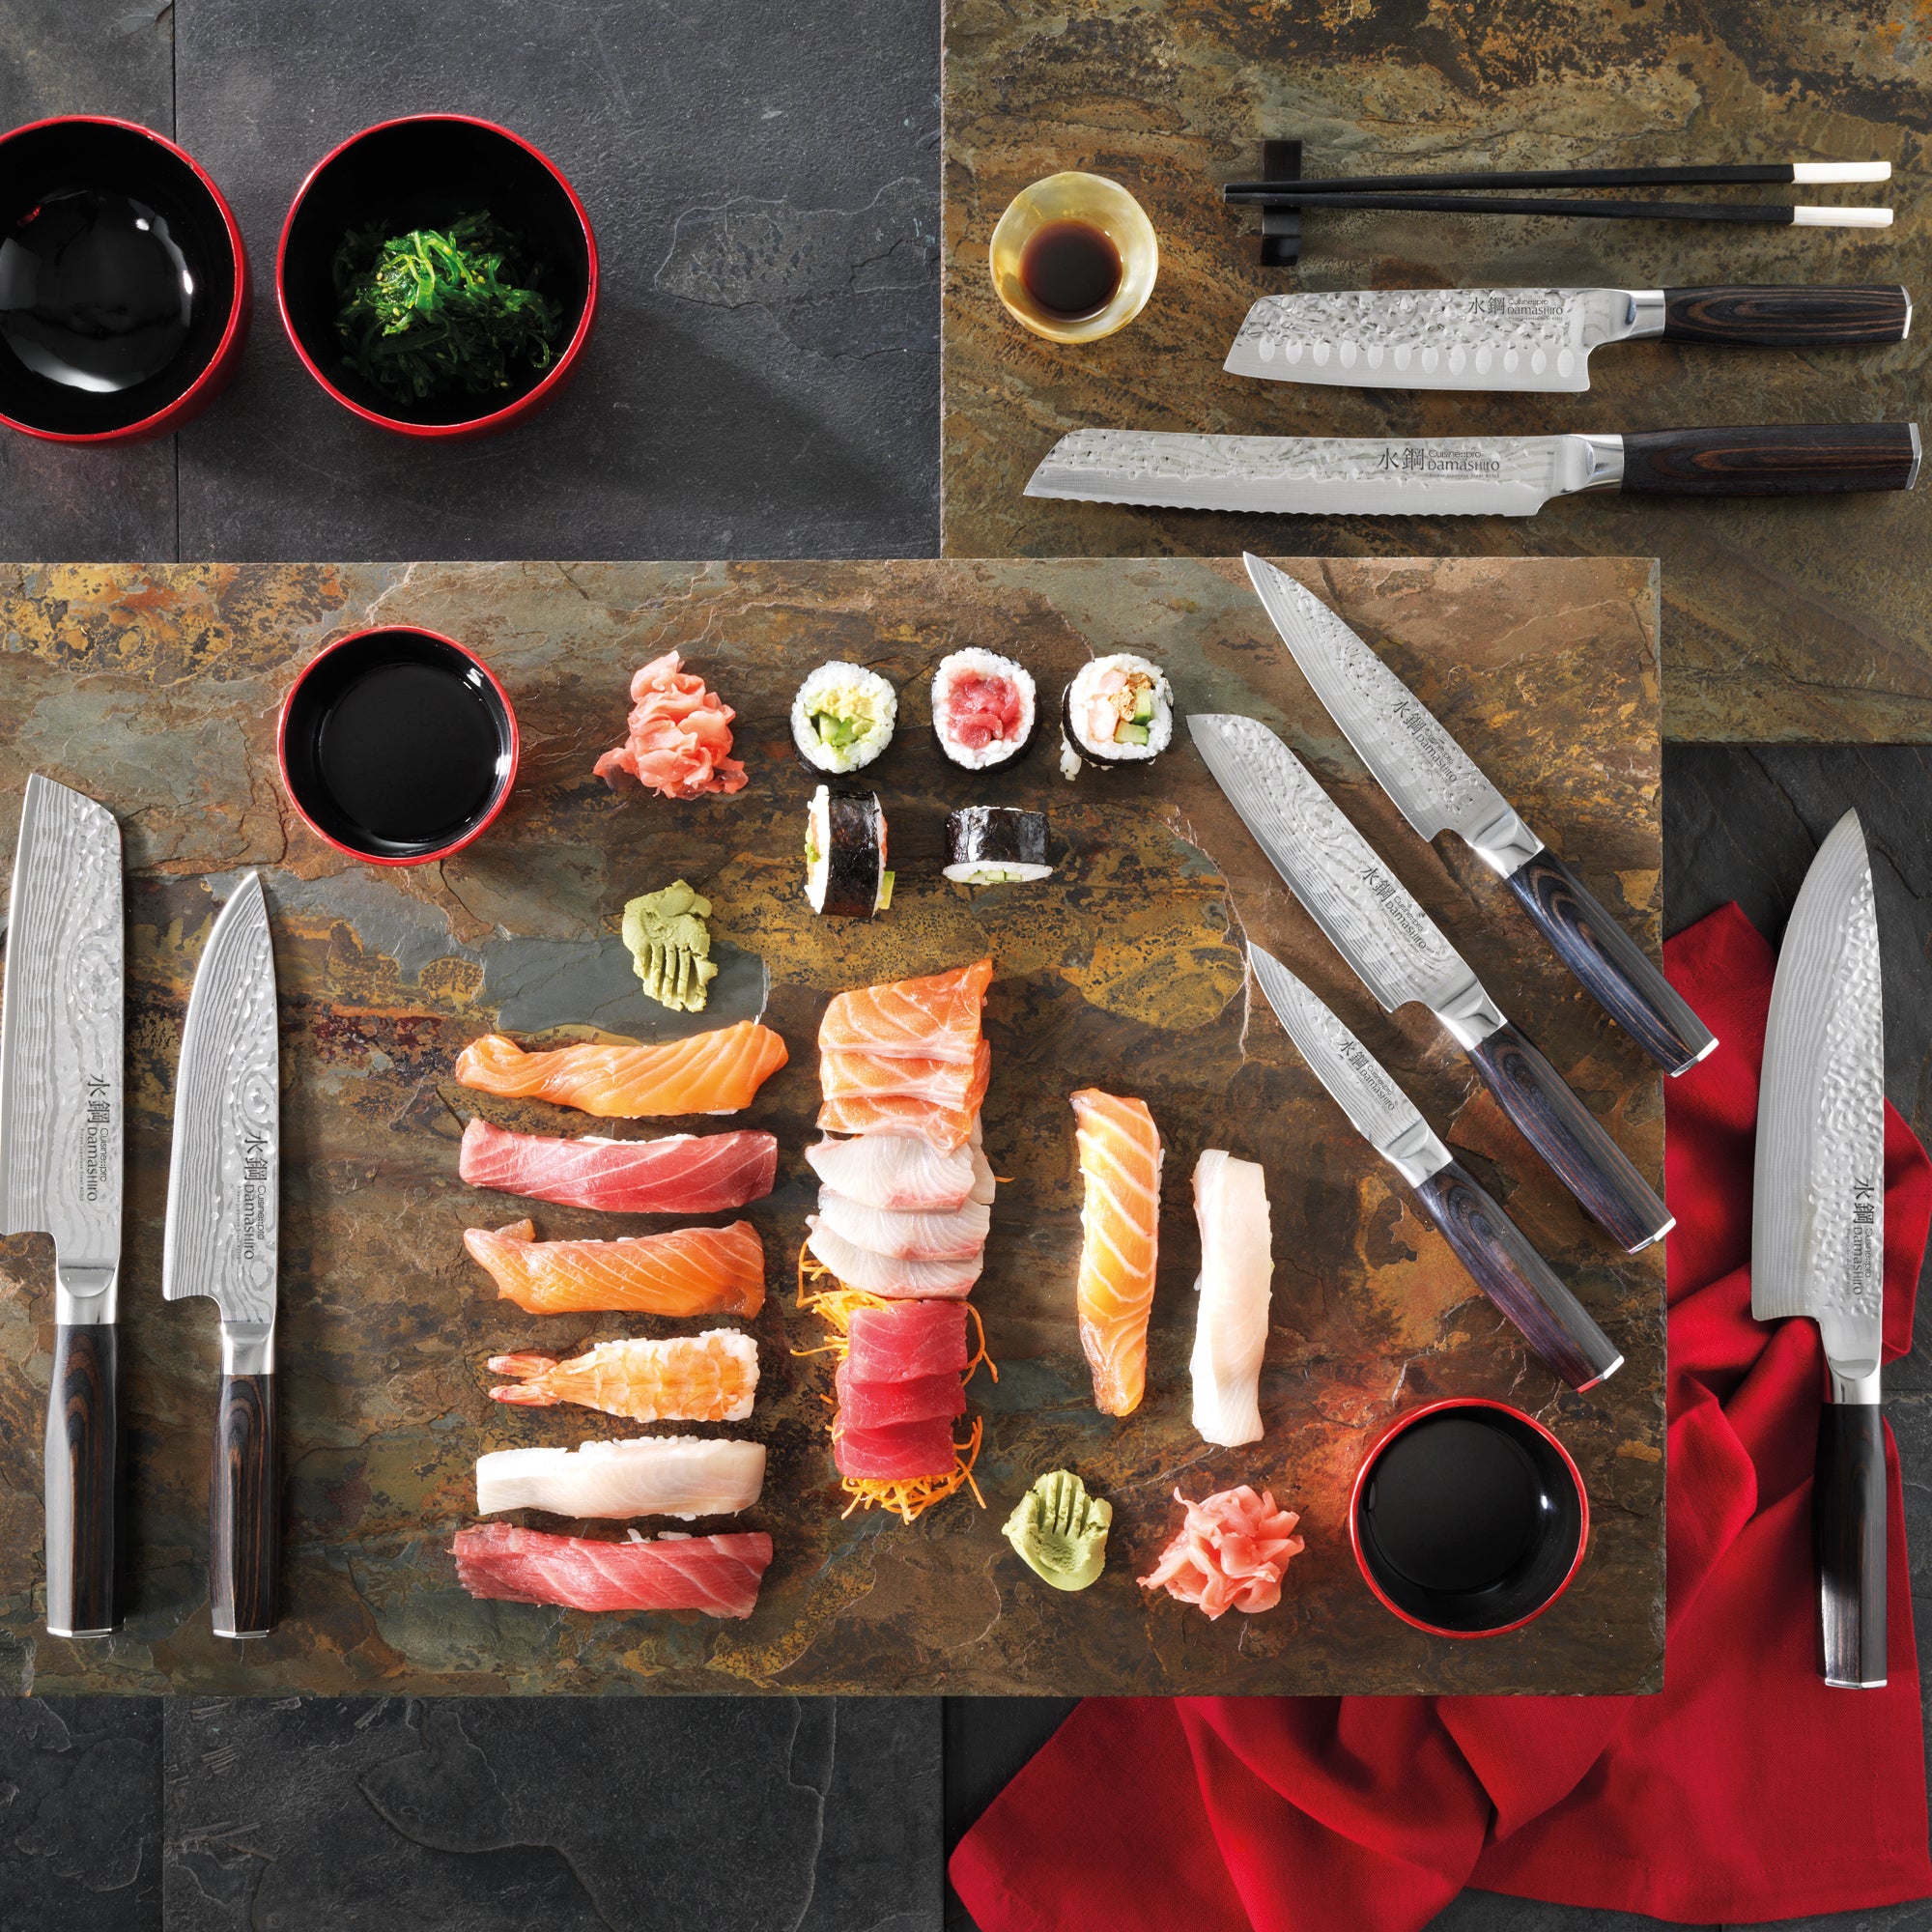 Cuisine Pro Damashiro Steel Santoku Knife 3-Piece Set